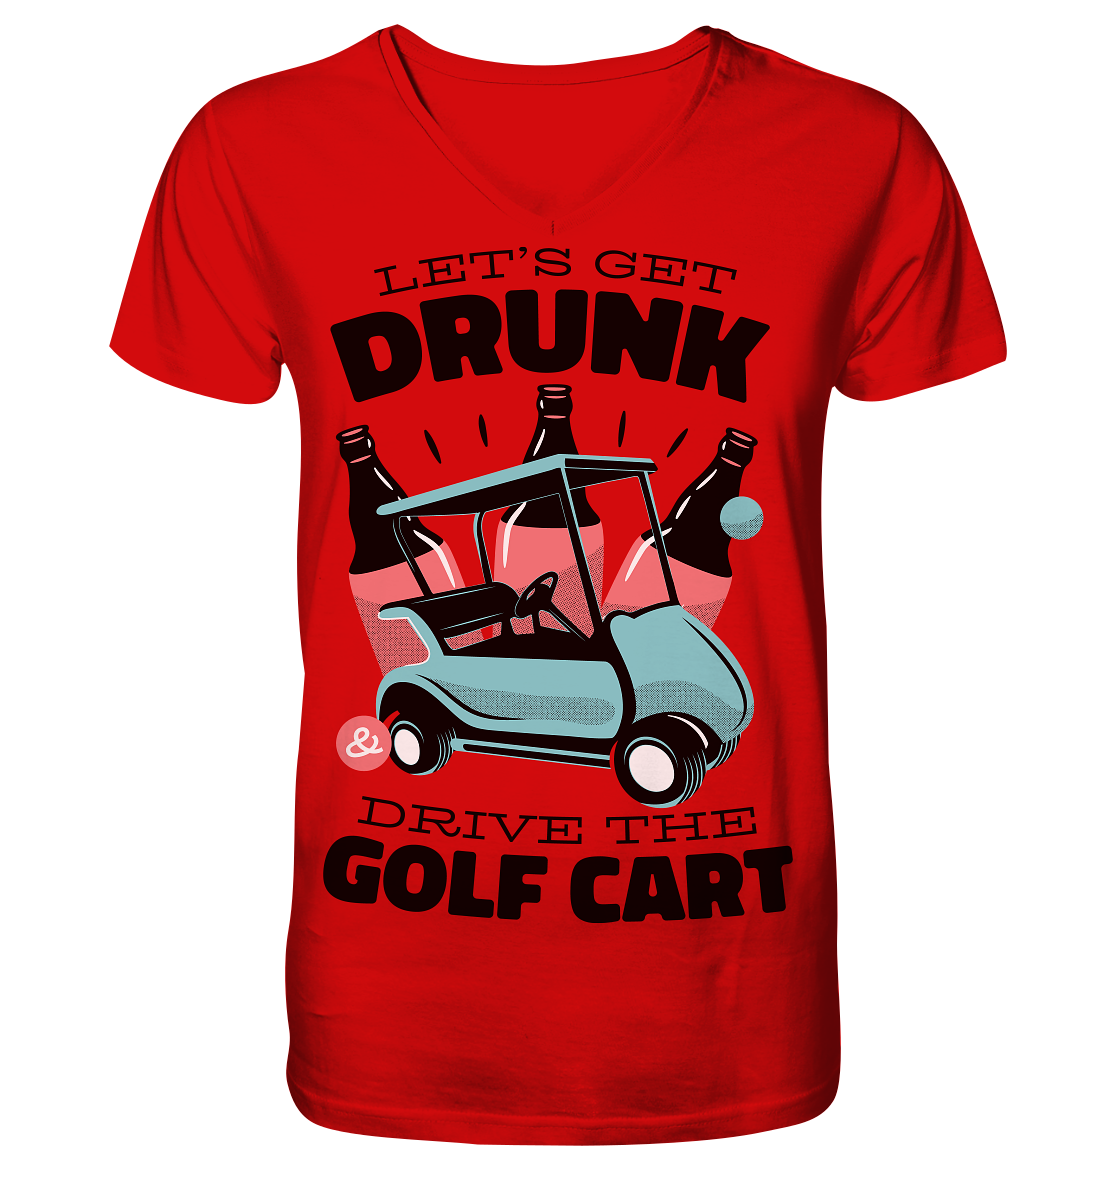 Let's get drunk drive the golf cart, Let's get drunk drive the golf cart - V-Neck Shirt